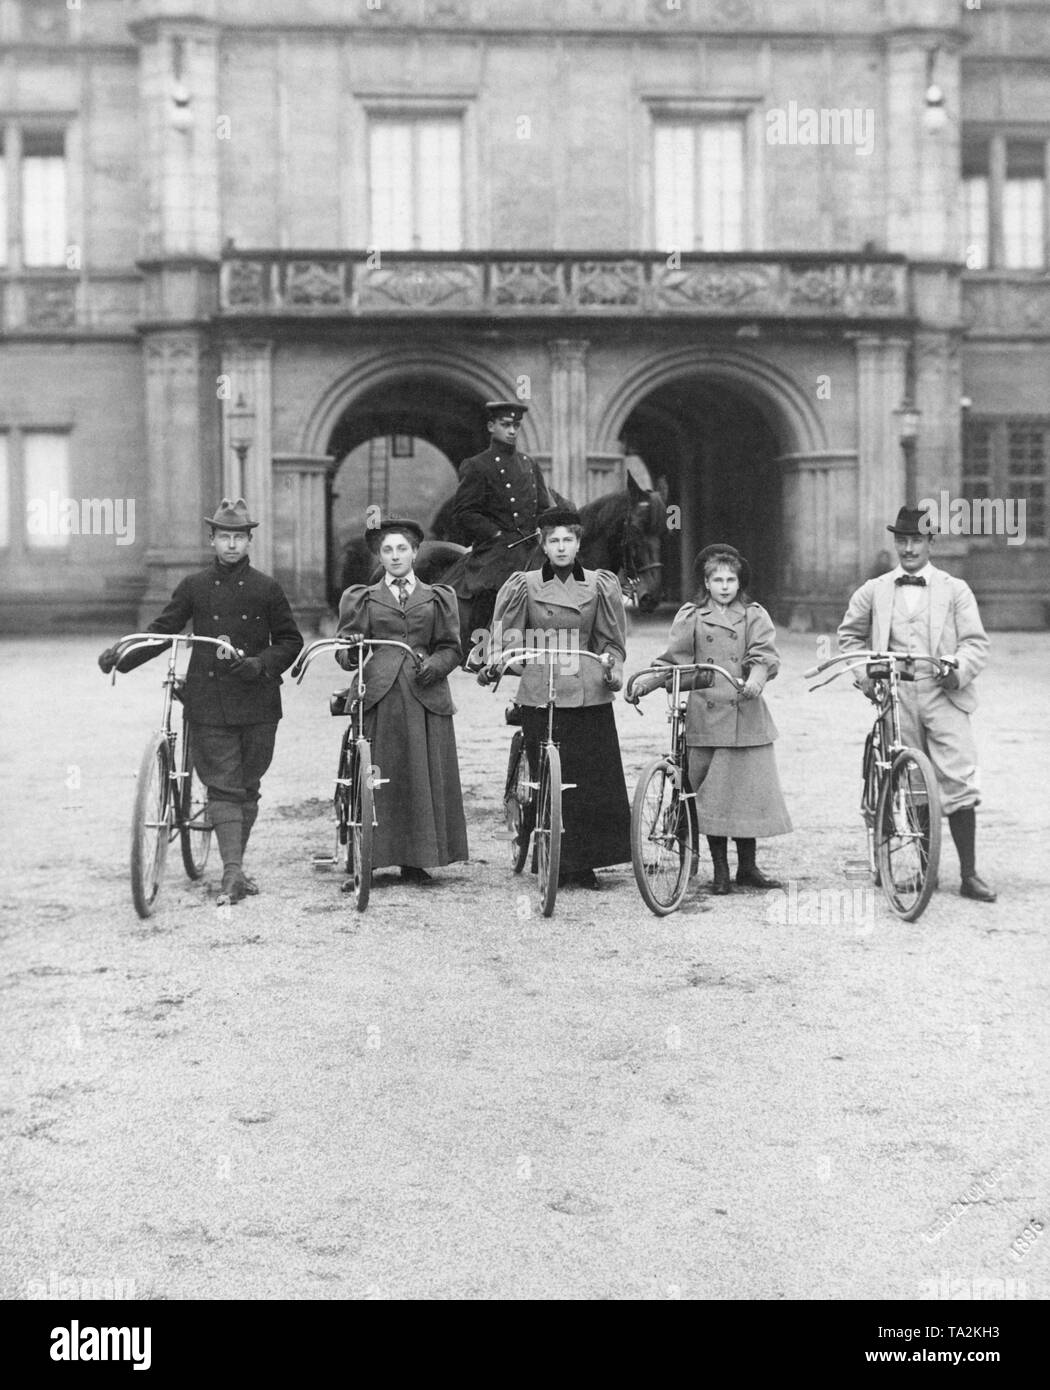 From left to right: Prince Alfred of Saxe-Coburg-Gotha, Princess Leopoldine of Ratibor, Princess Alexandra and Princess Beatrice of Saxe-Coburg-Gotha, Prince Ernst II von Hohenlohe-Langenburg in front of Castle Ehrenburg in Coburg. Undated photo. Stock Photo